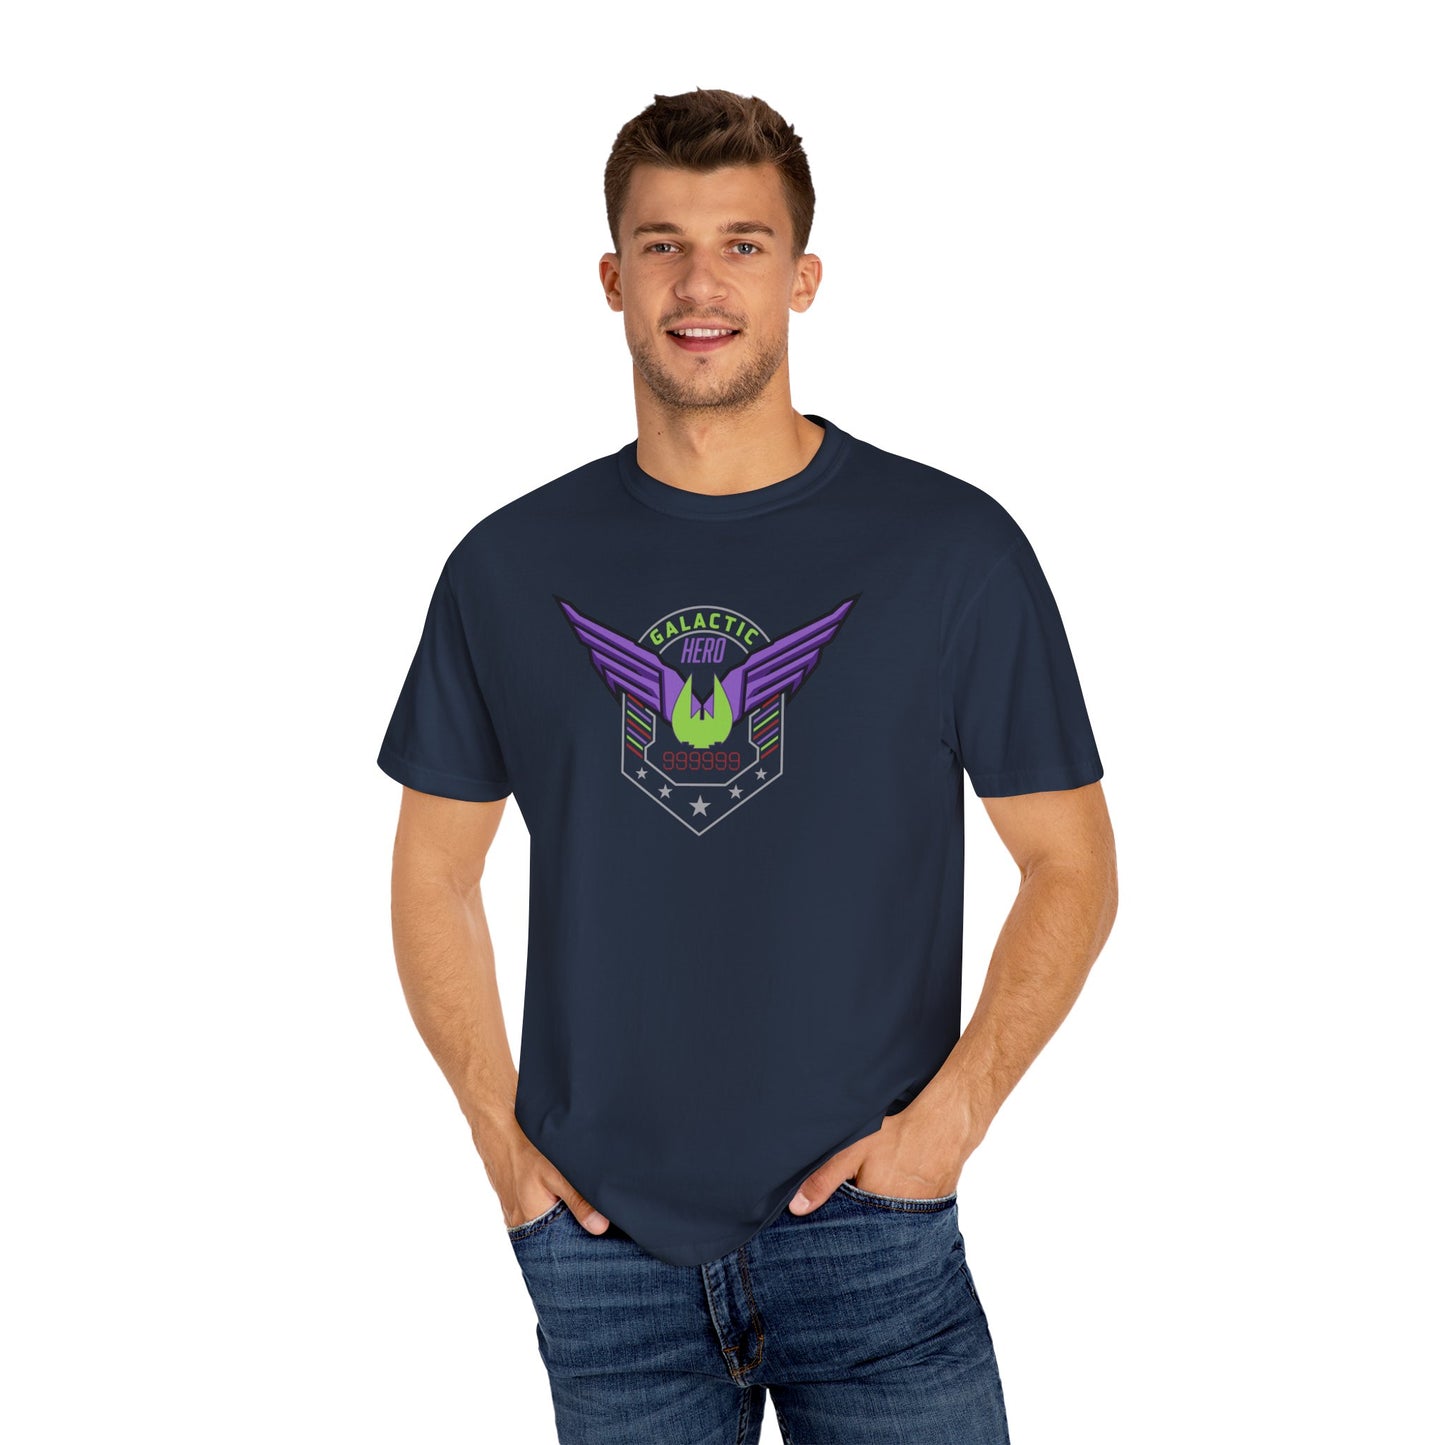 Galactic Hero T-shirt, Space Ranger Shirt, Comfort Colors